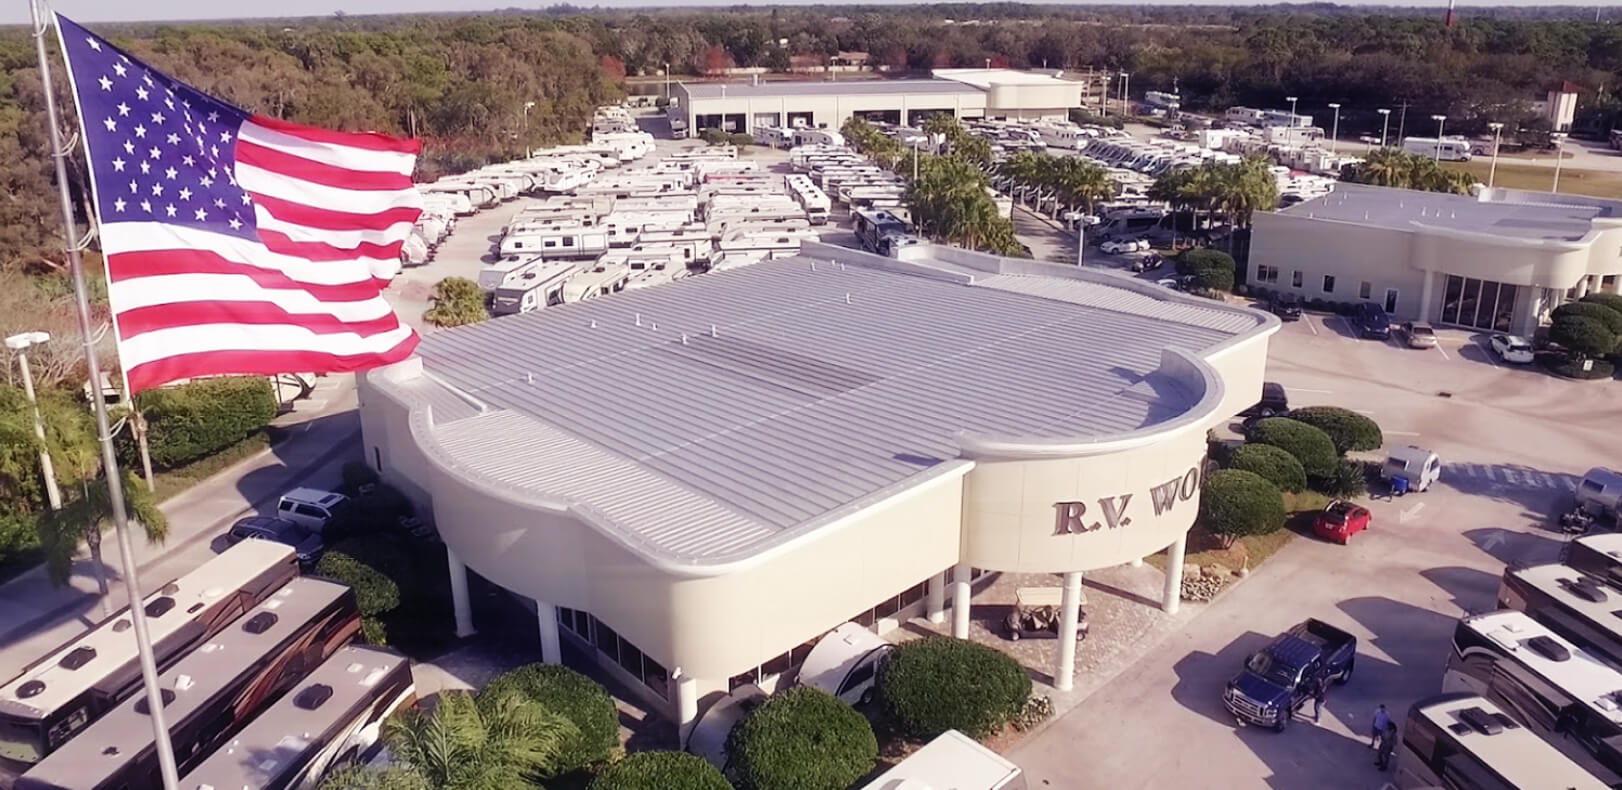 Gerzeny's RV World in Florida